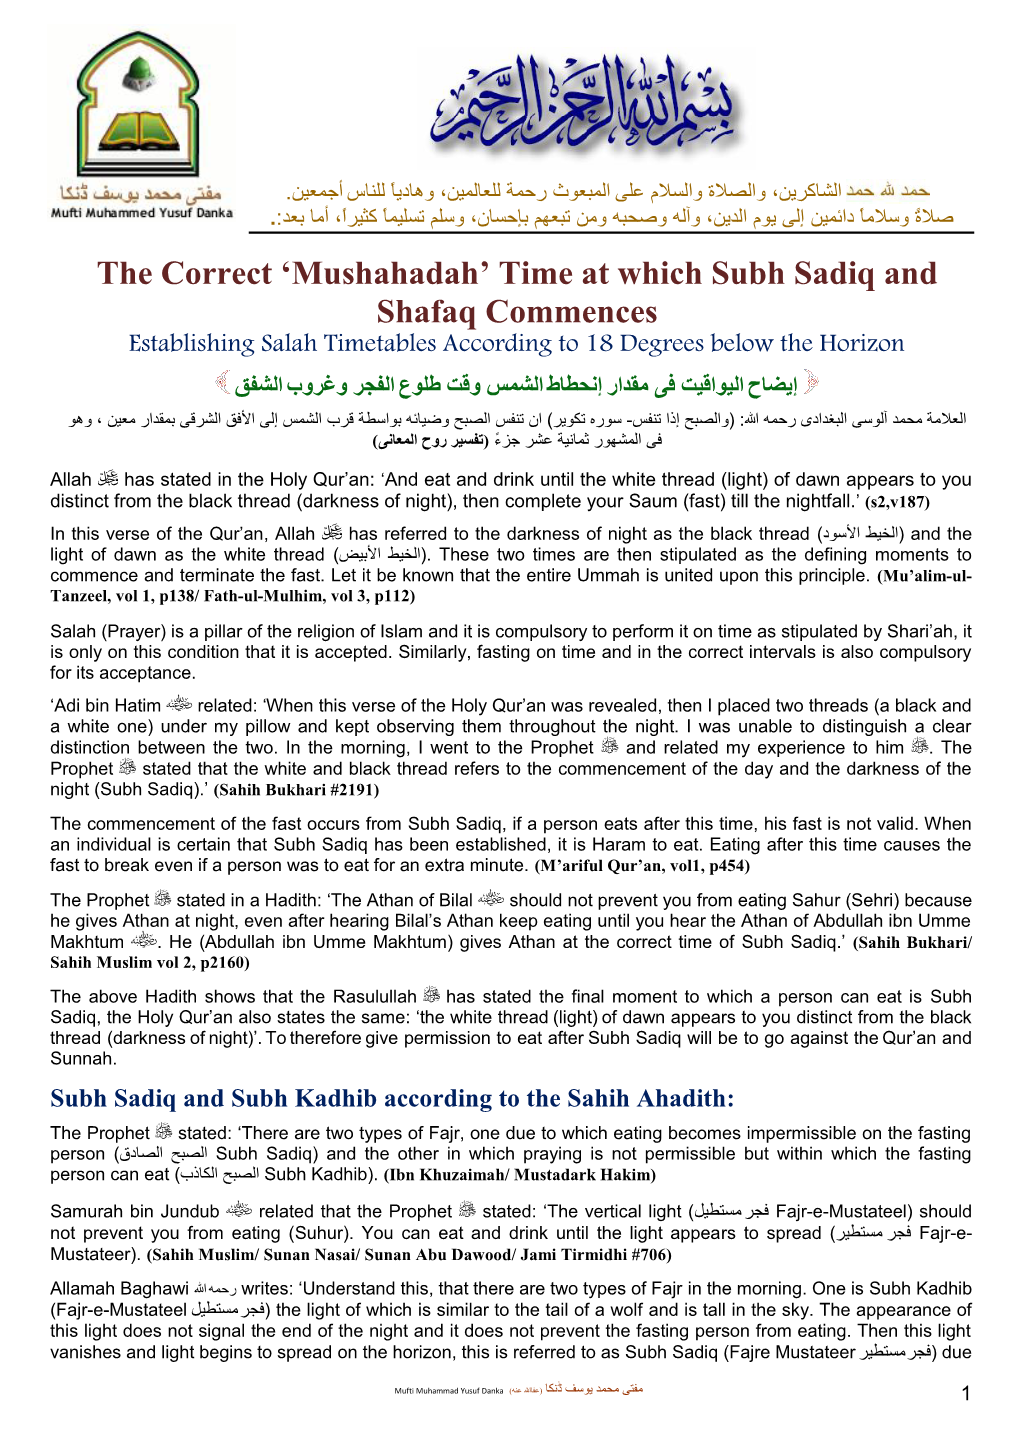 The Correct 'Mushahadah' Time at Which Subh Sadiq and Shafaq Commences